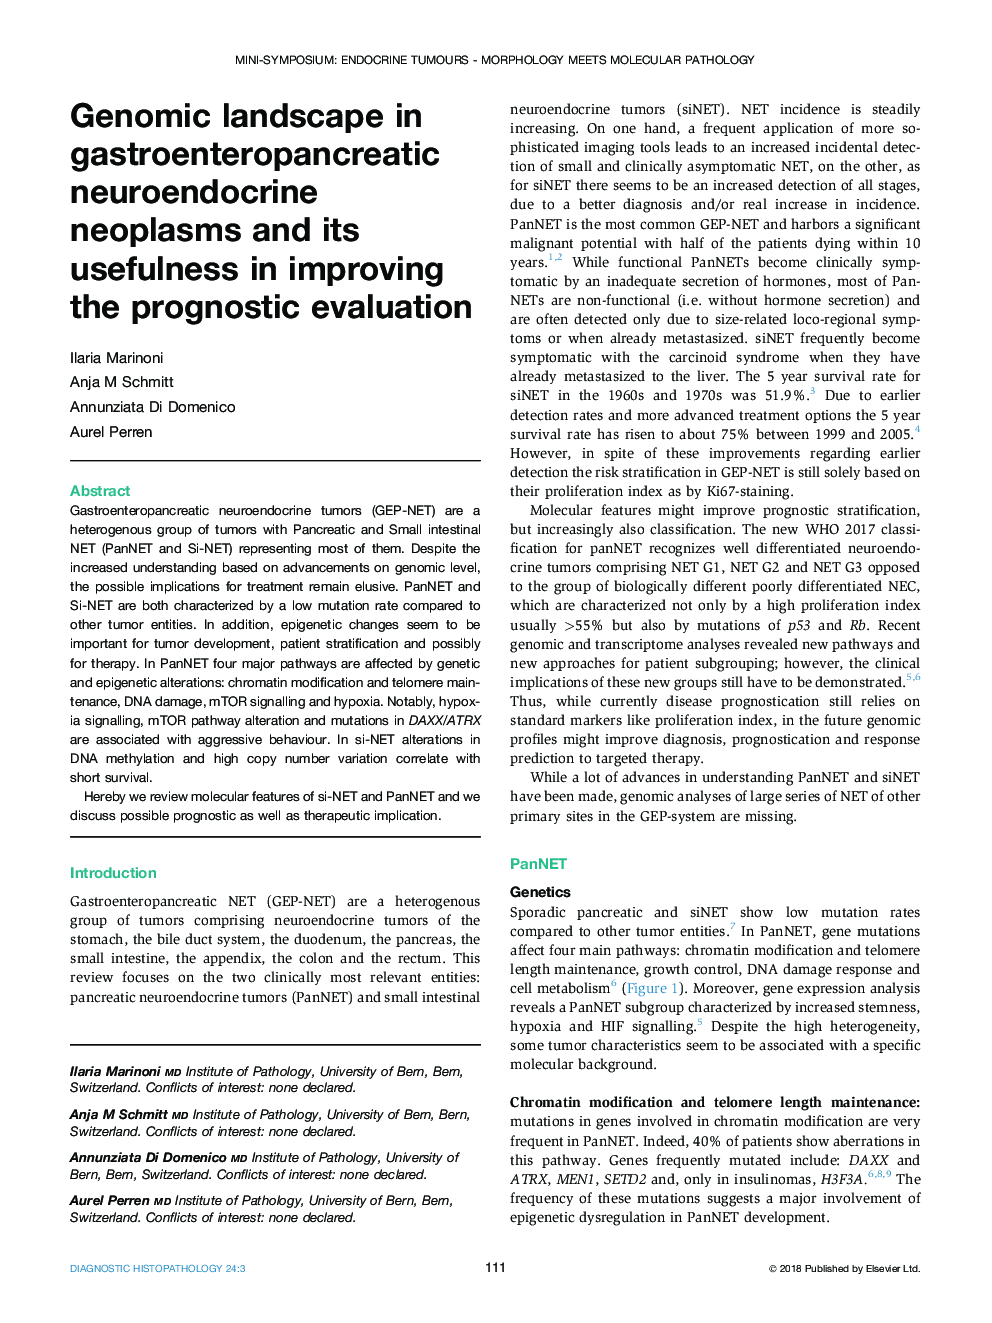 Genomic landscape in gastroenteropancreatic neuroendocrine neoplasms and its usefulness in improving the prognostic evaluation